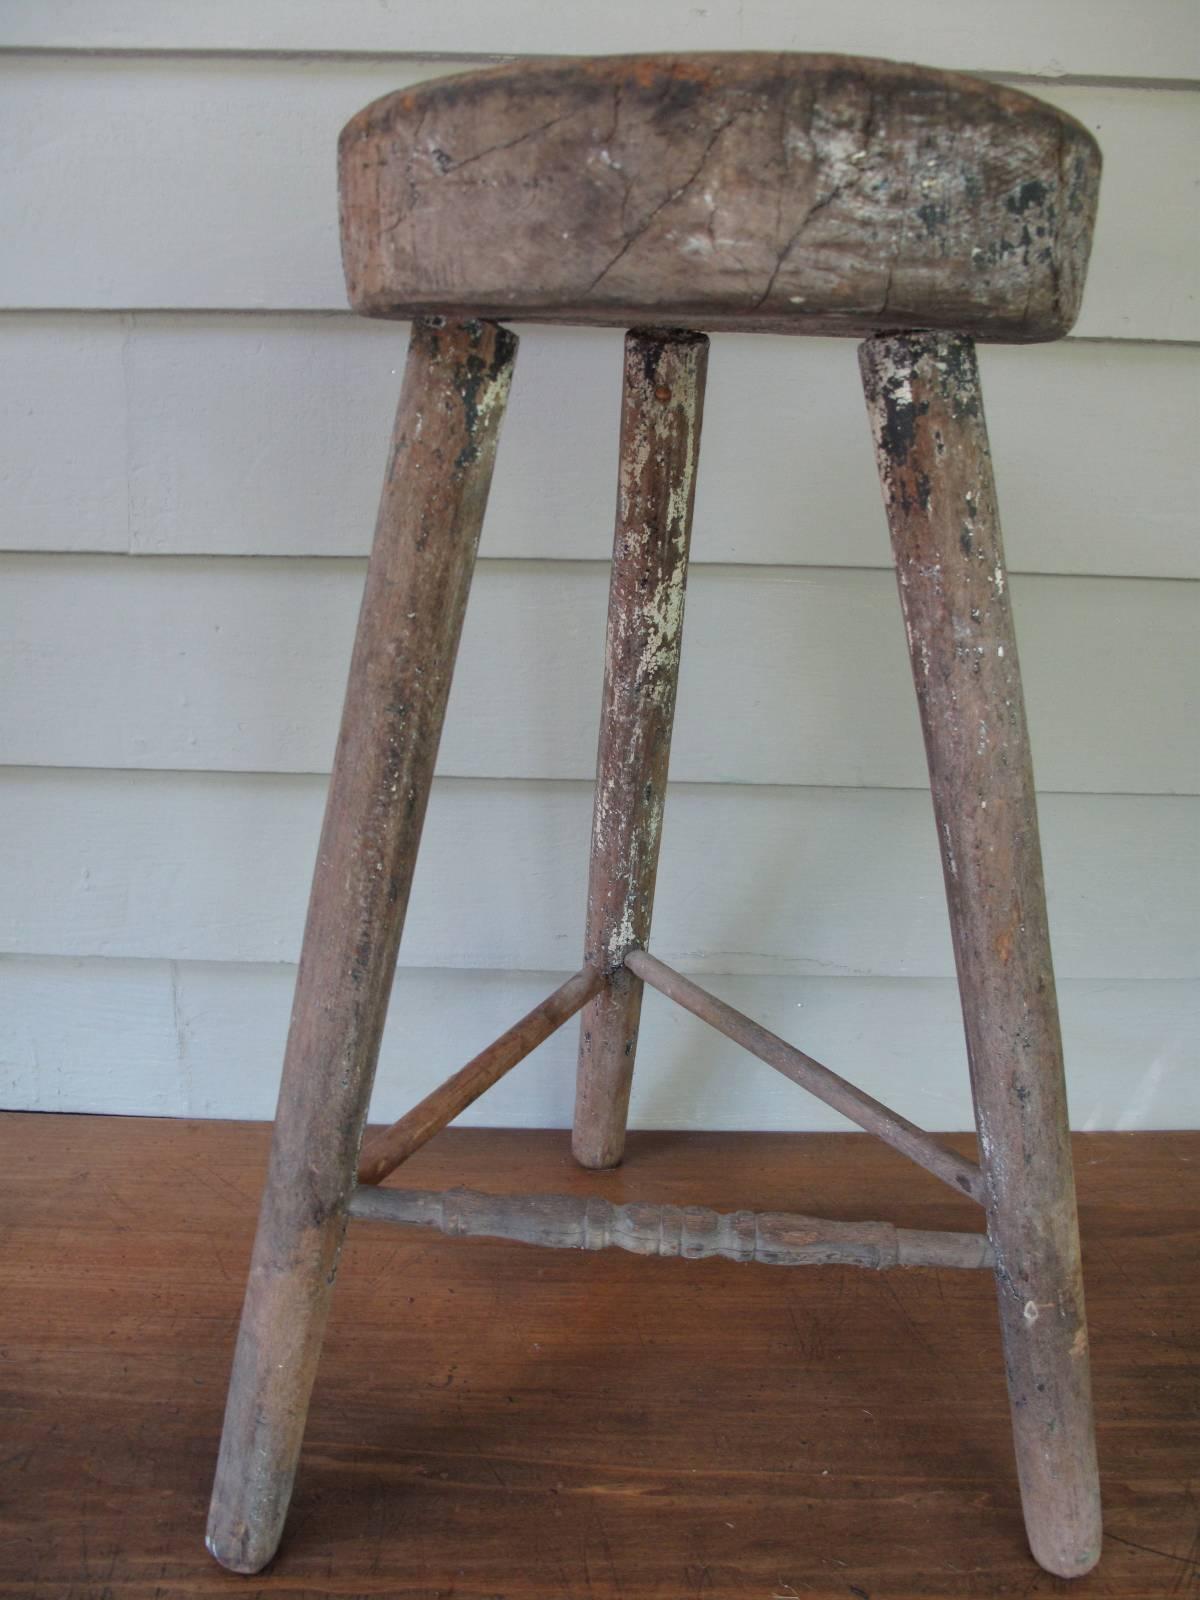 Early 20th century American farm stool. 

Base measures 16